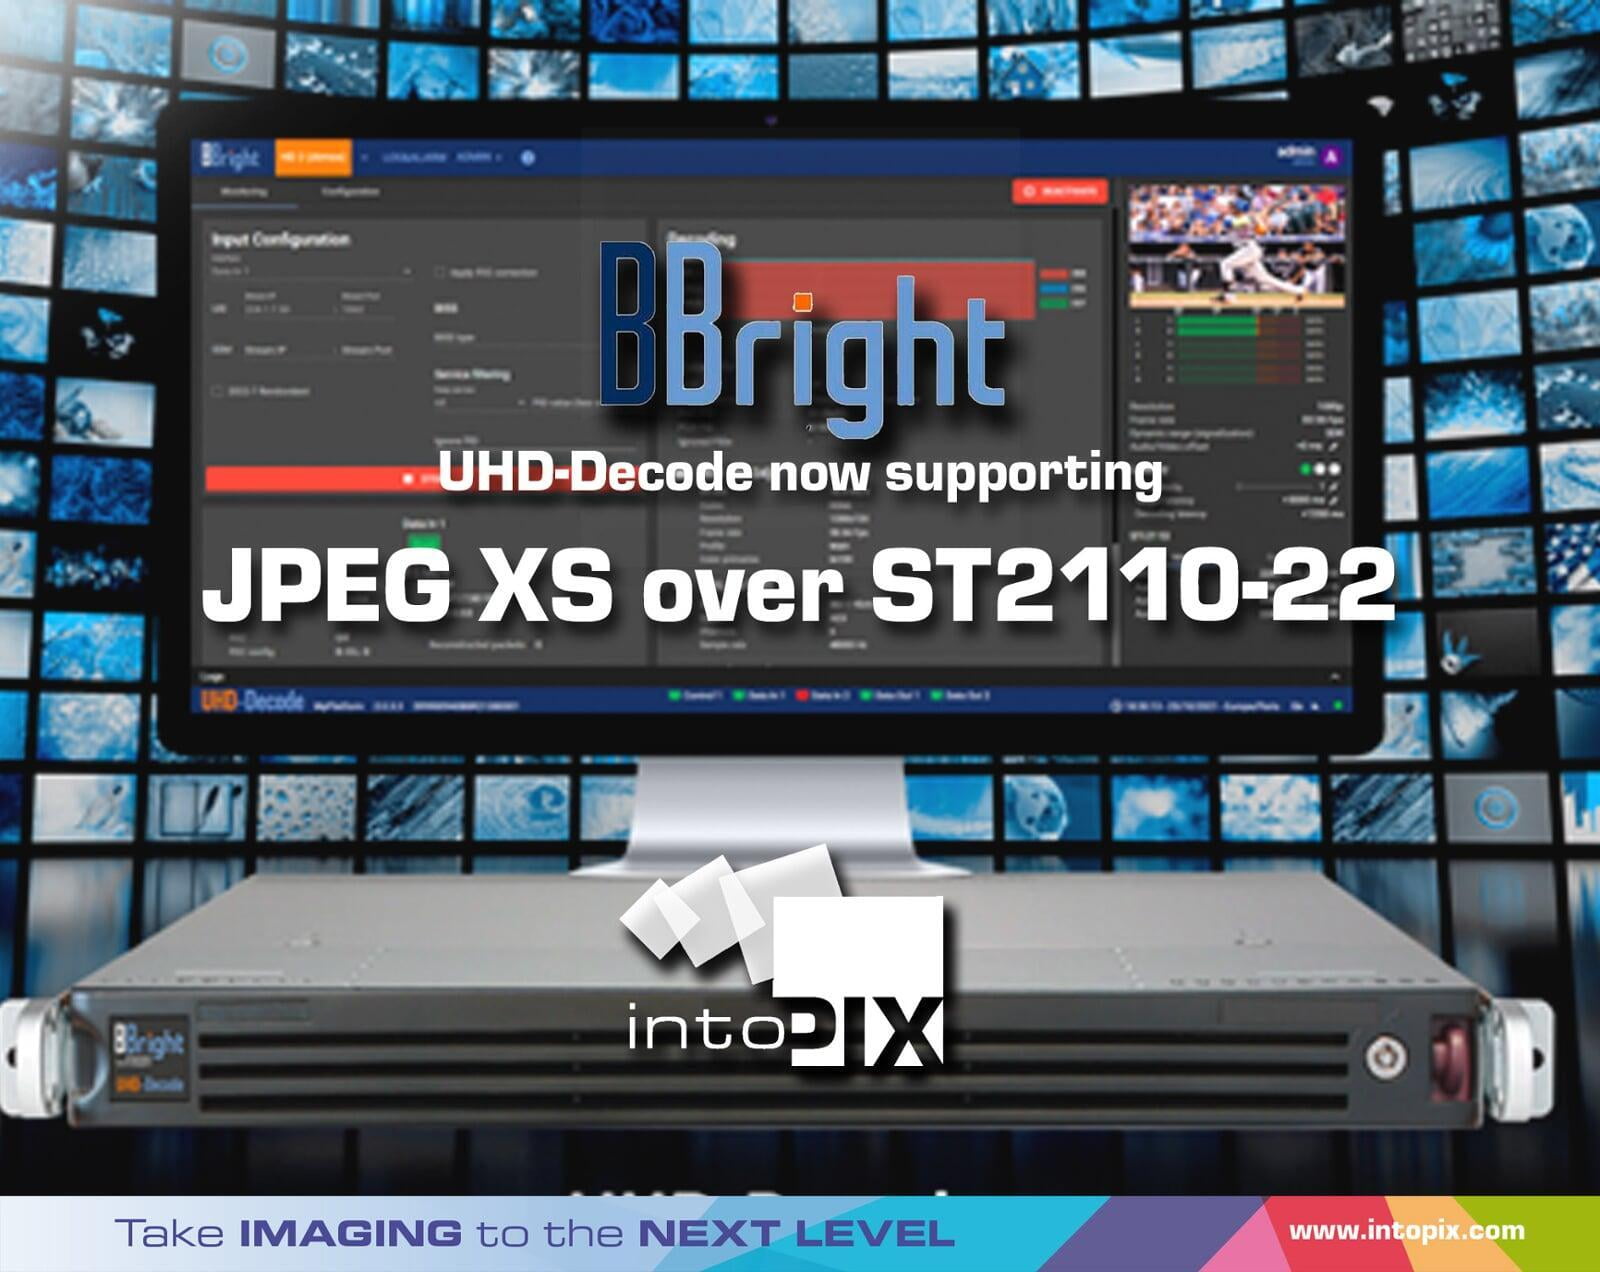 La passerelle média UHD BBright intègre la technologie intoPIX JPEG  XS 